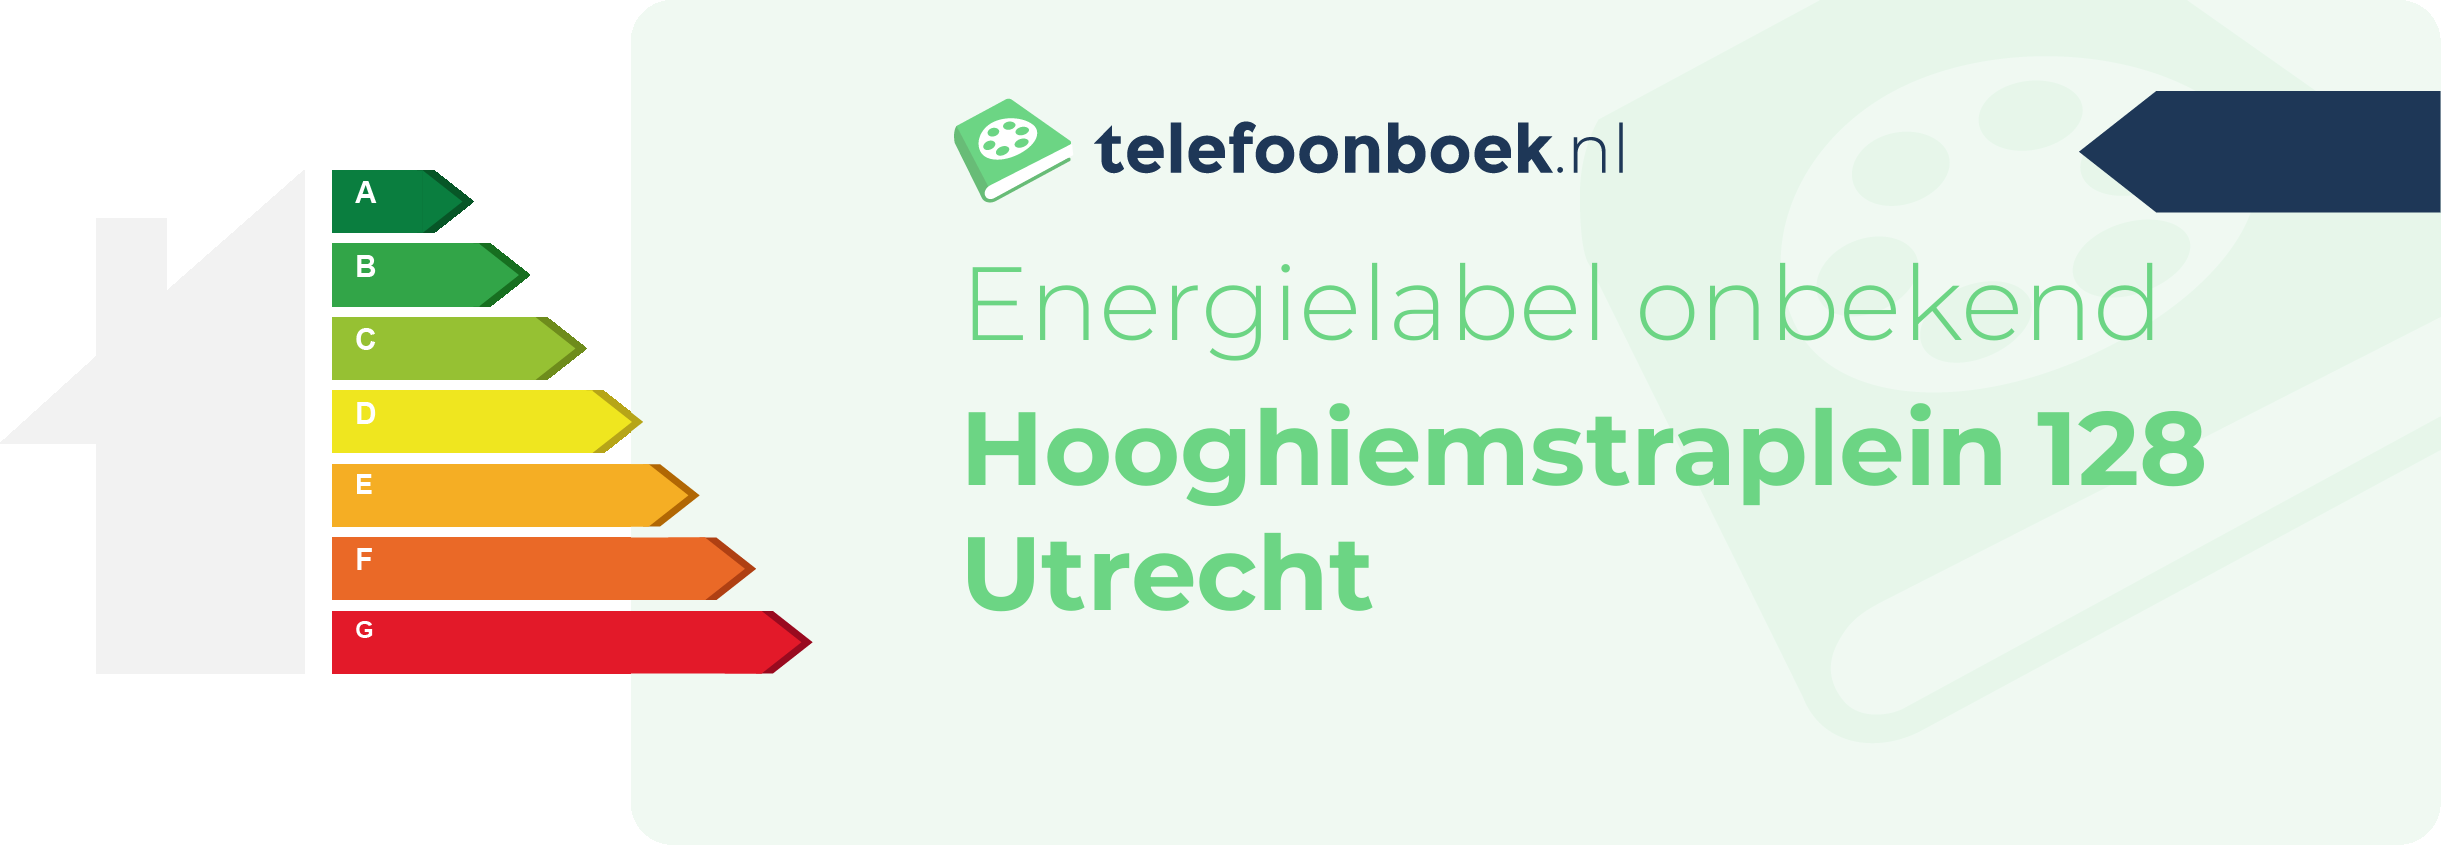 Energielabel Hooghiemstraplein 128 Utrecht